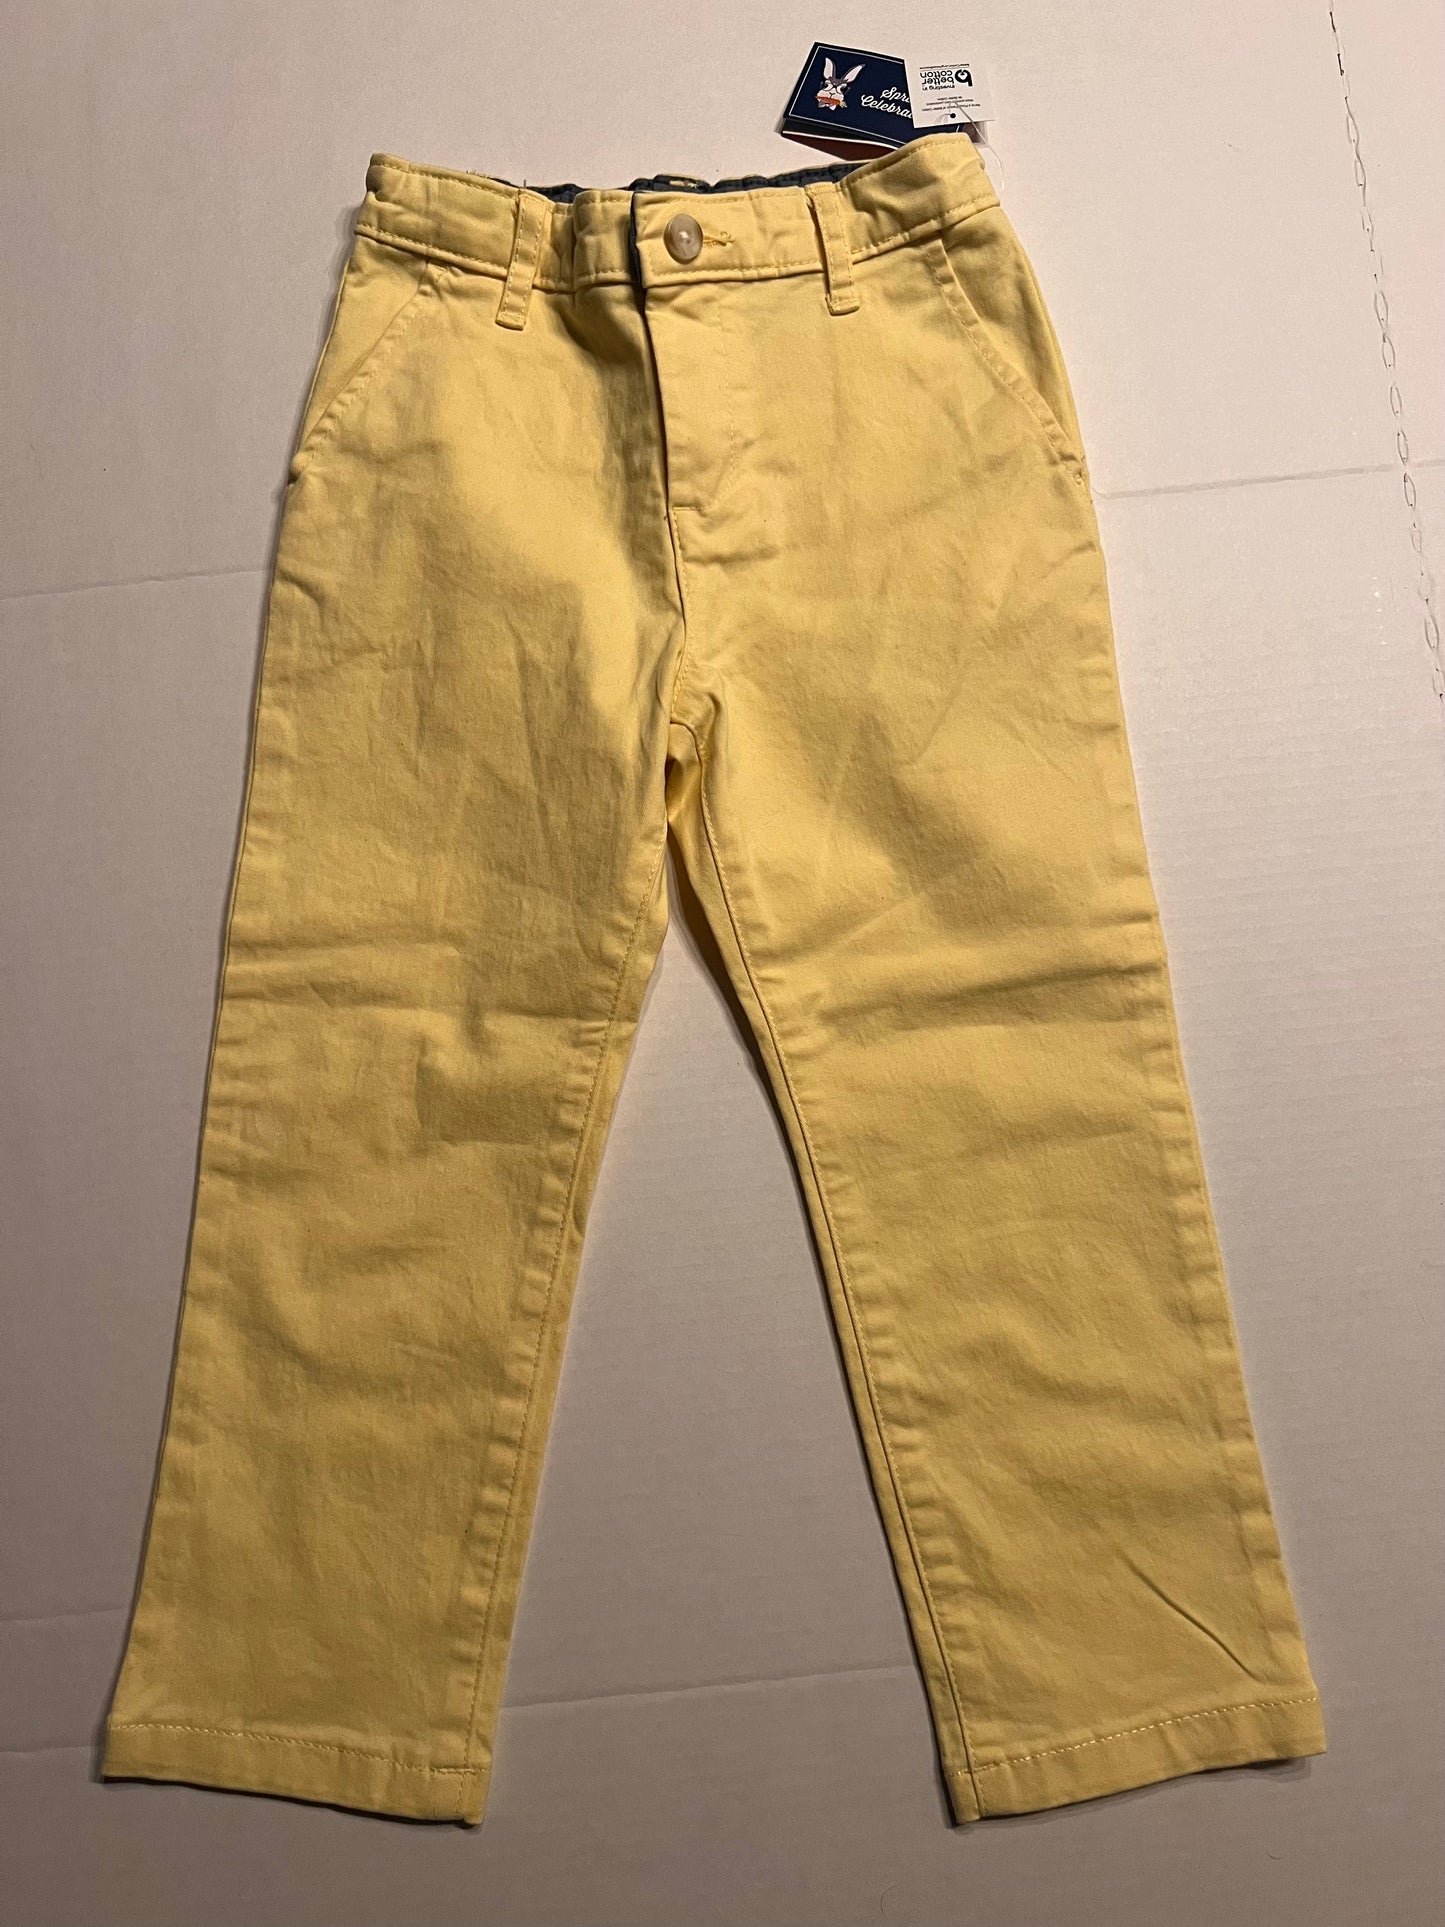 4T Yellow Chino pants NWT